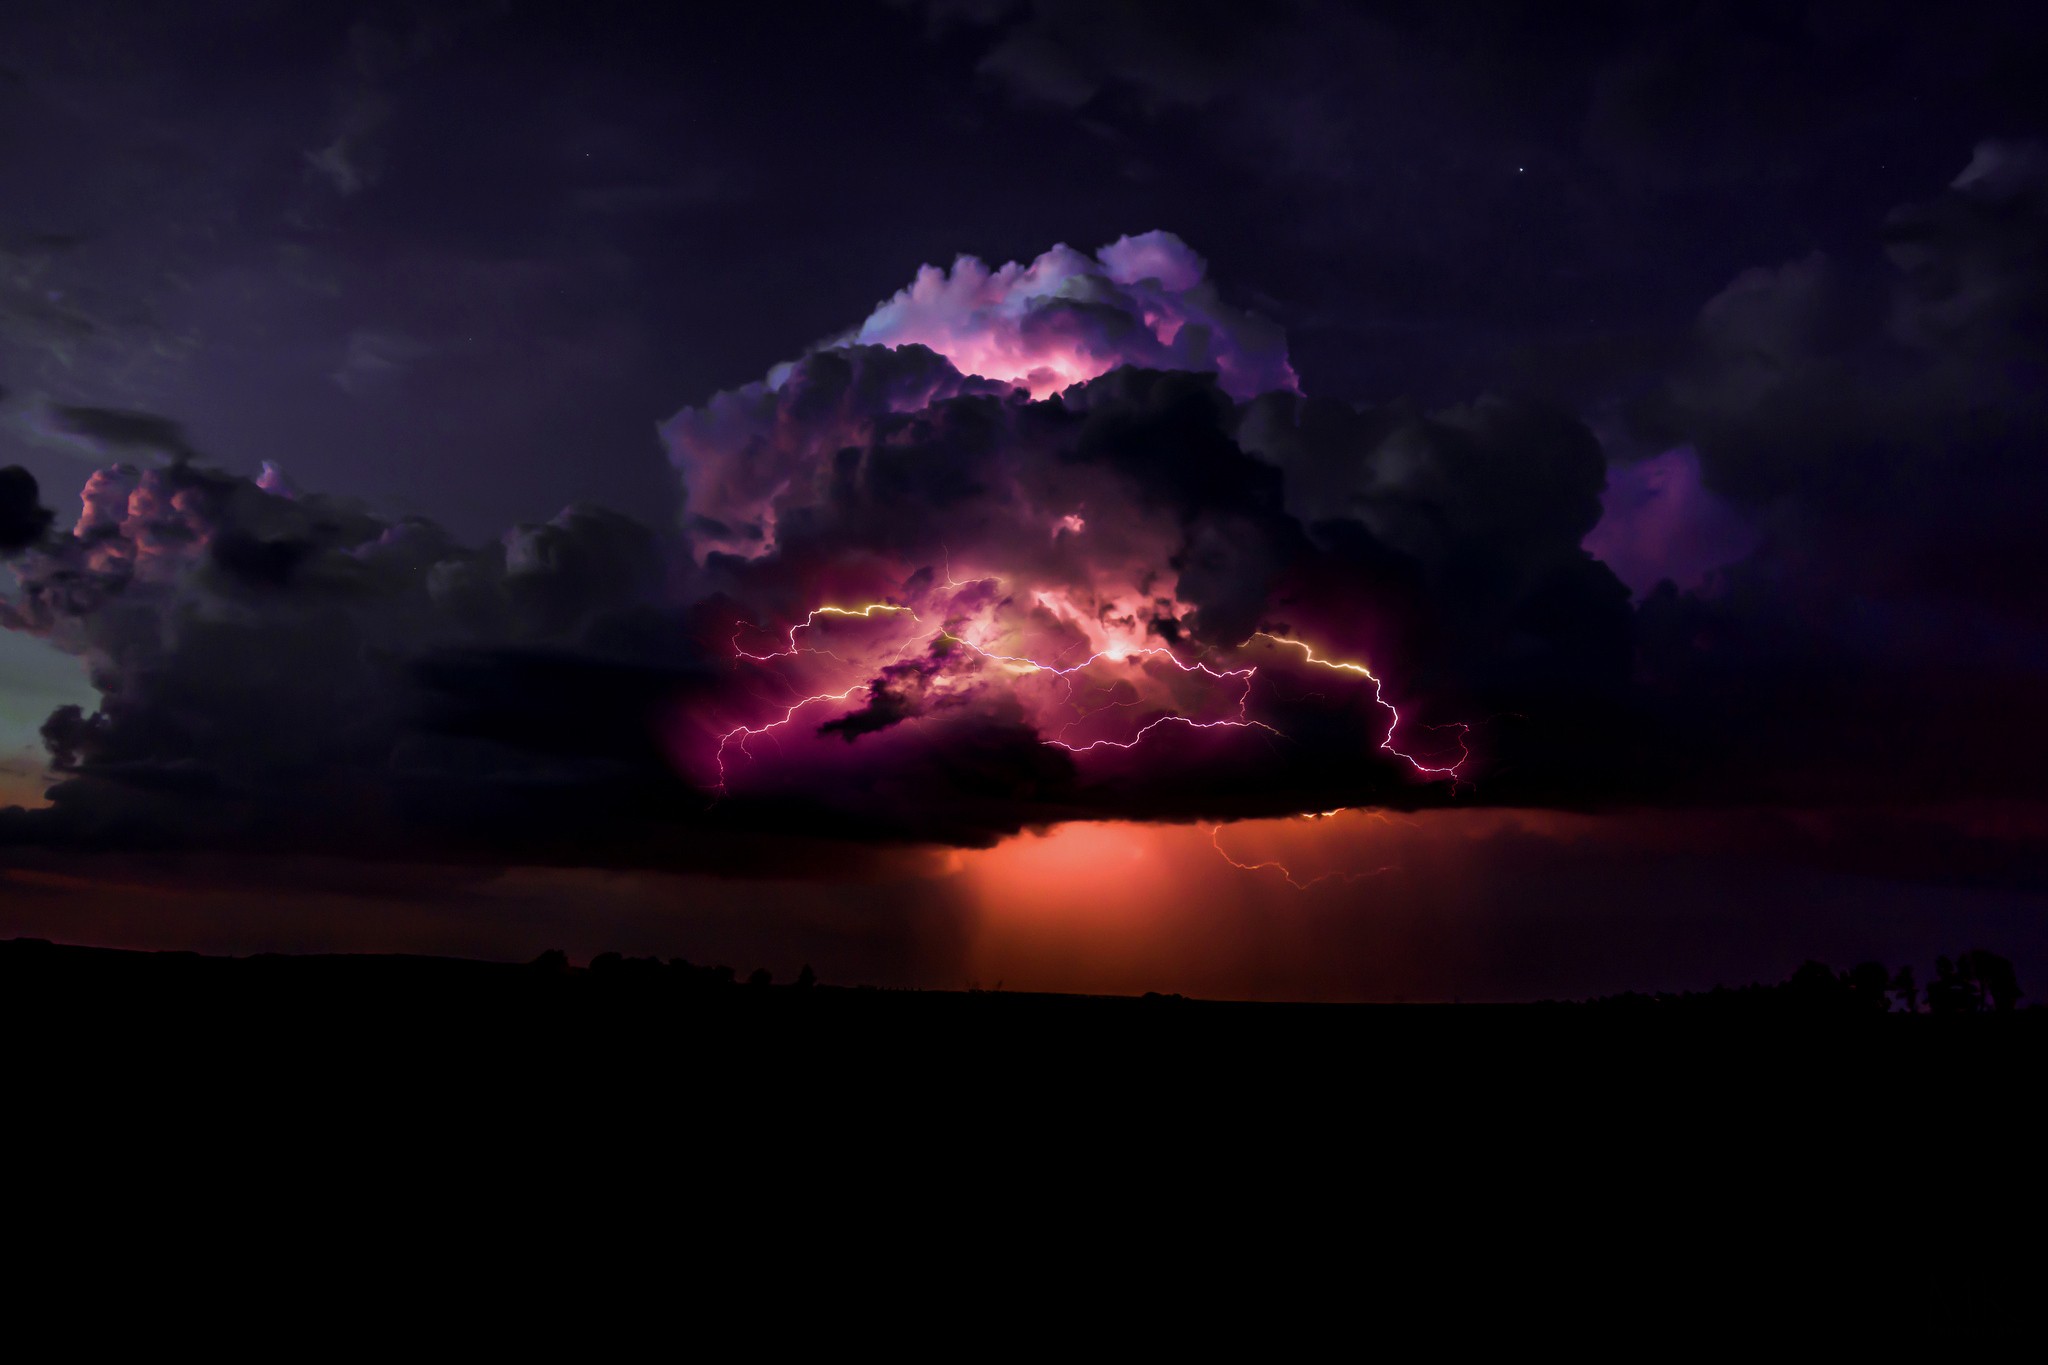 General 2048x1365 storm digital art night clouds lightning dark nature sky